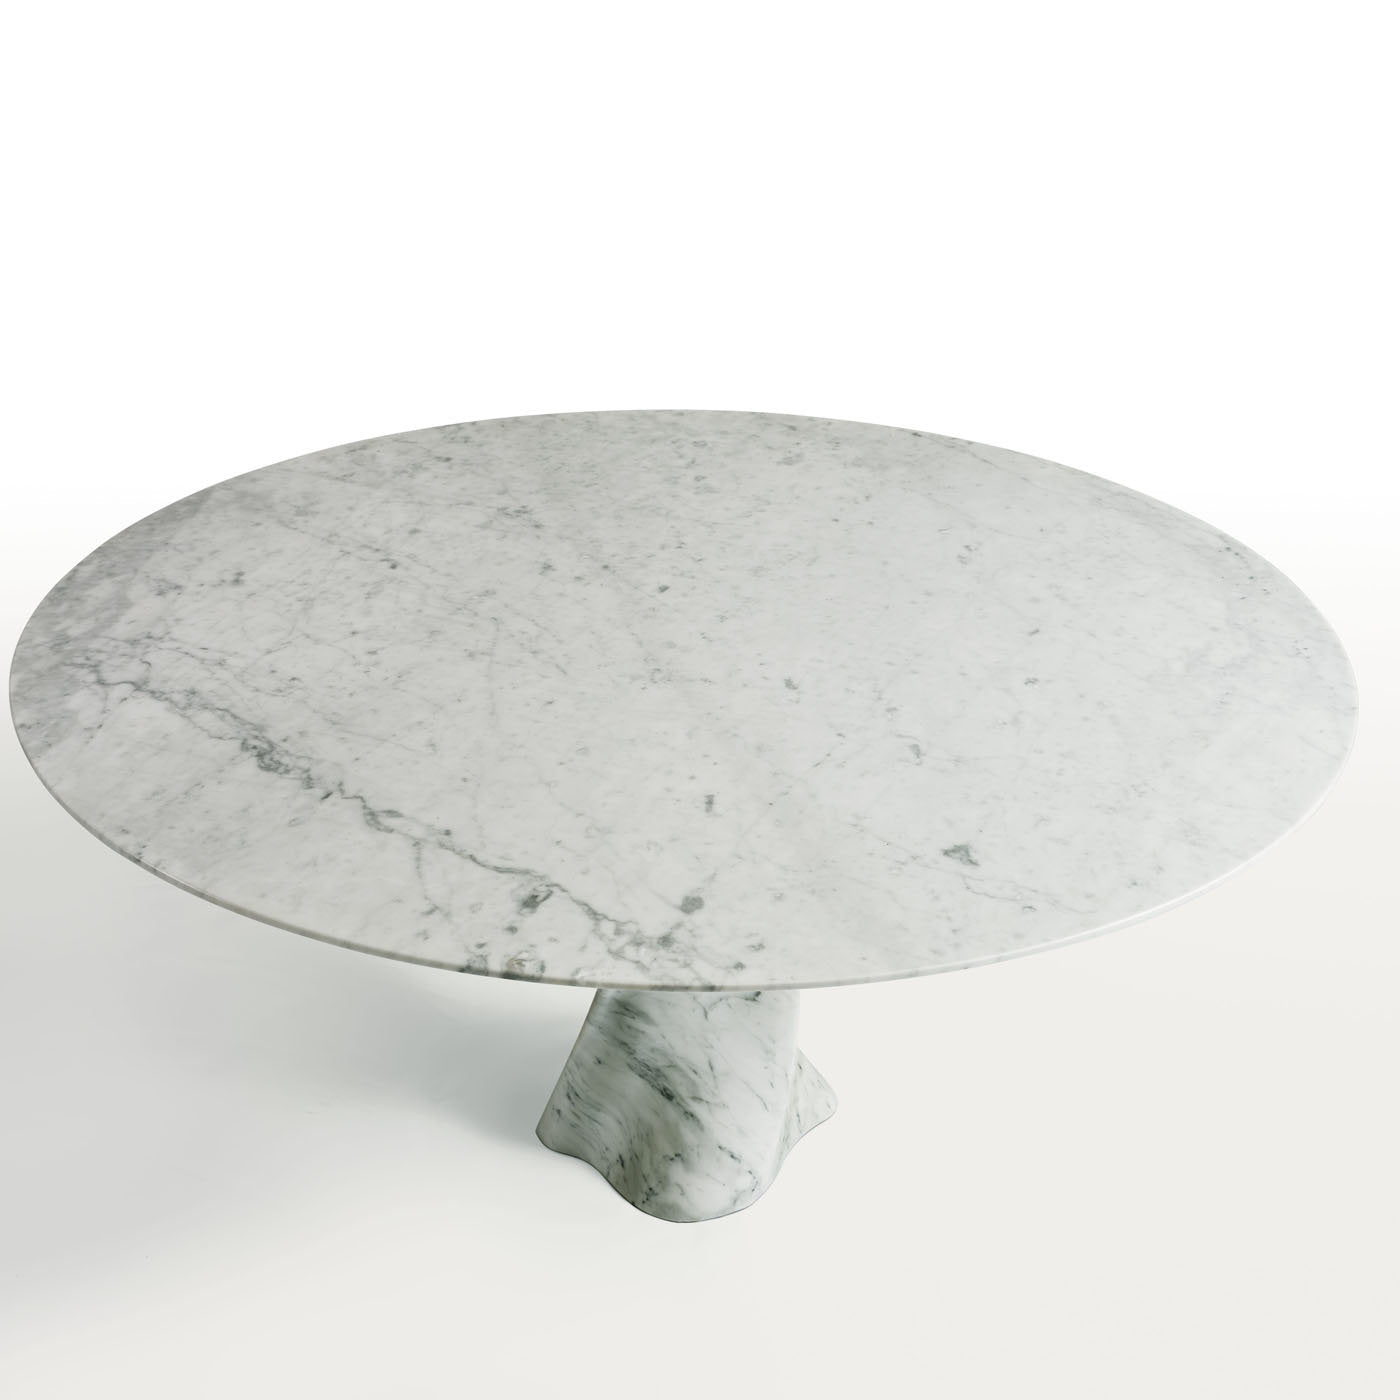 Twist Table in White Carrara Marble by Giuseppe Chigiotti - Alternative view 2